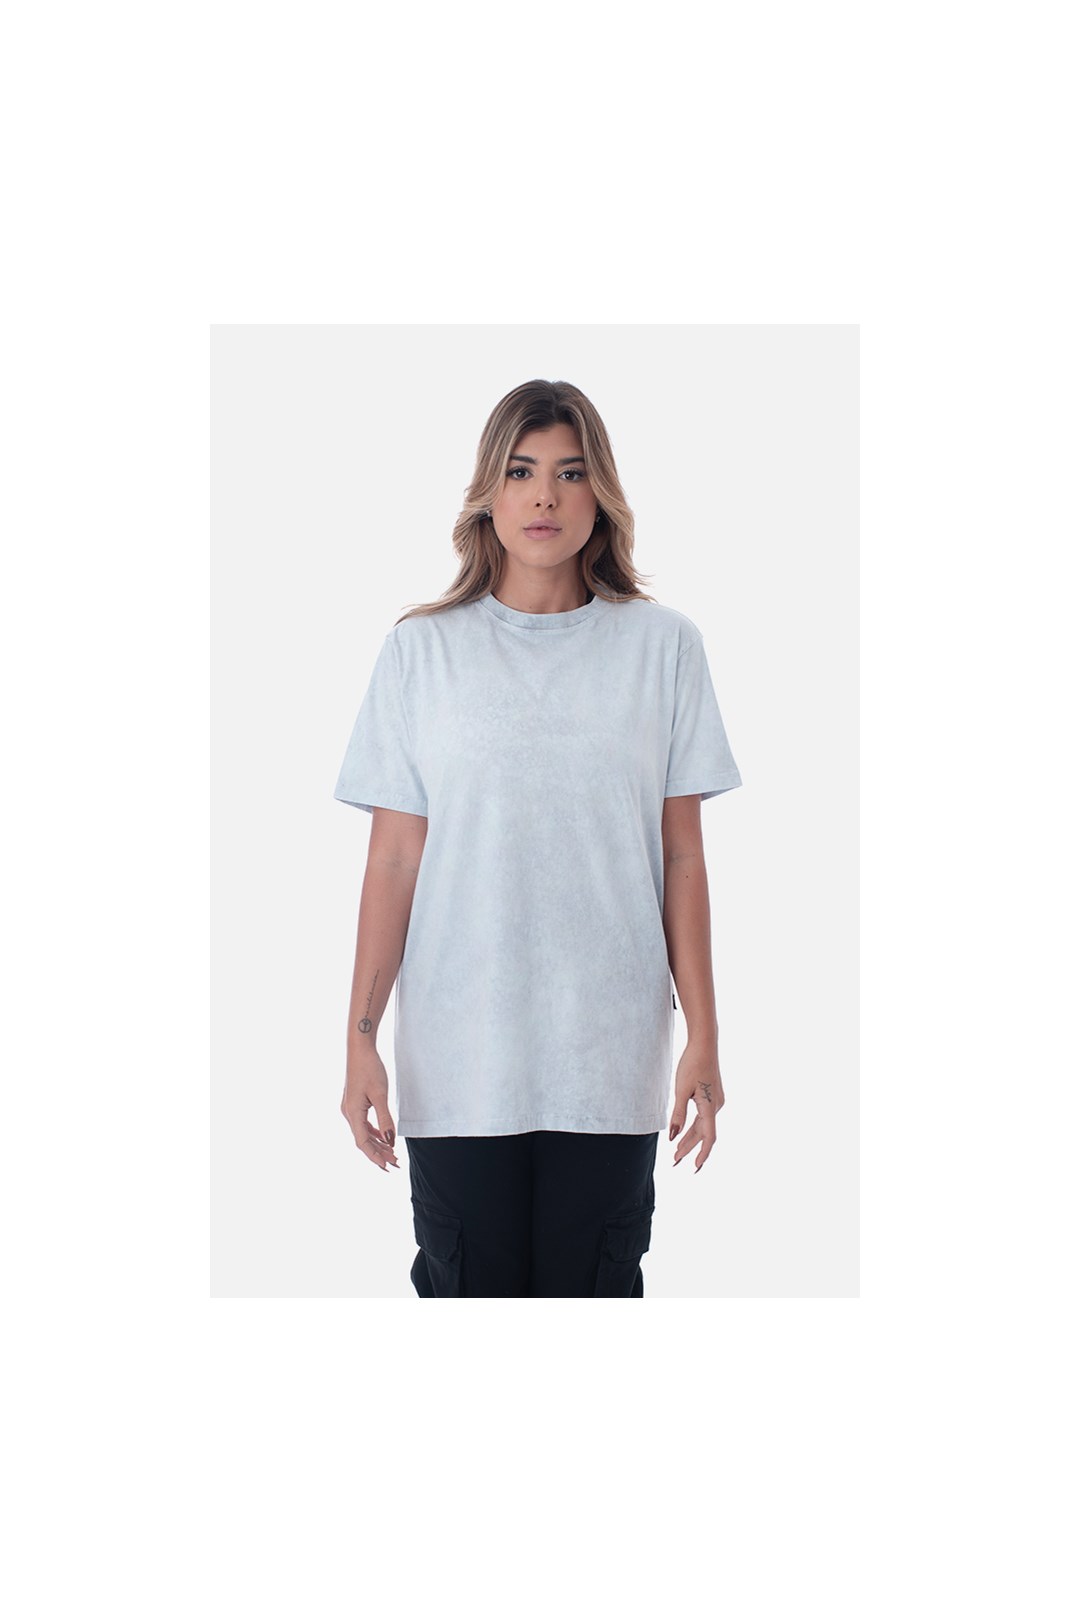 Camiseta Bold Approve Basic Branca Marmorizada